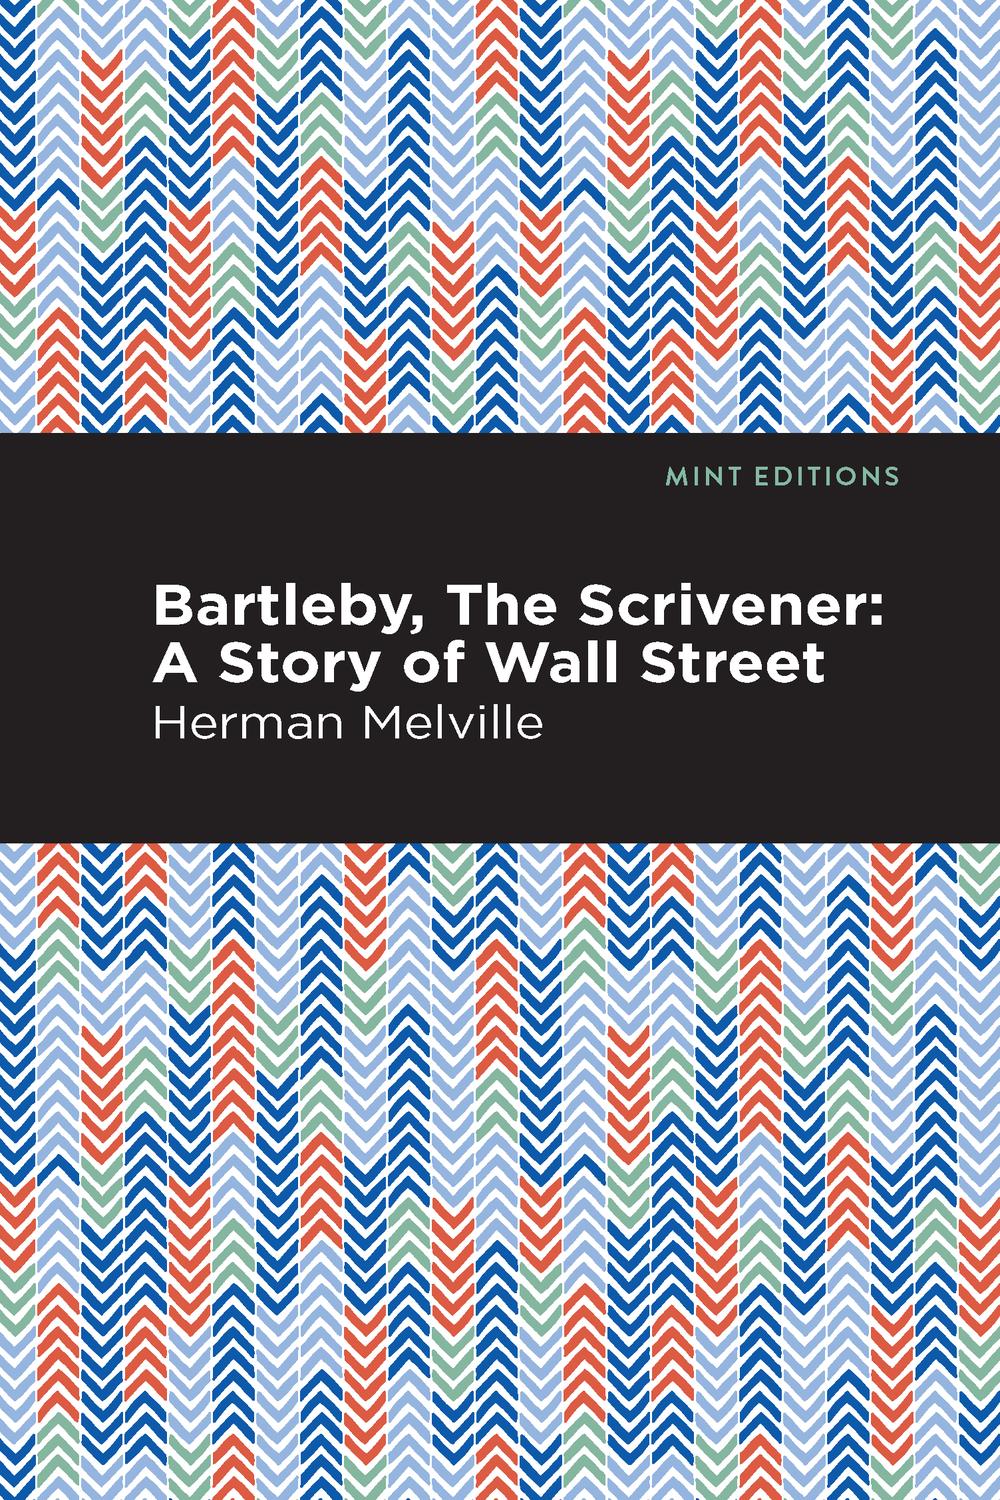 bartleby the scrivener full text pdf